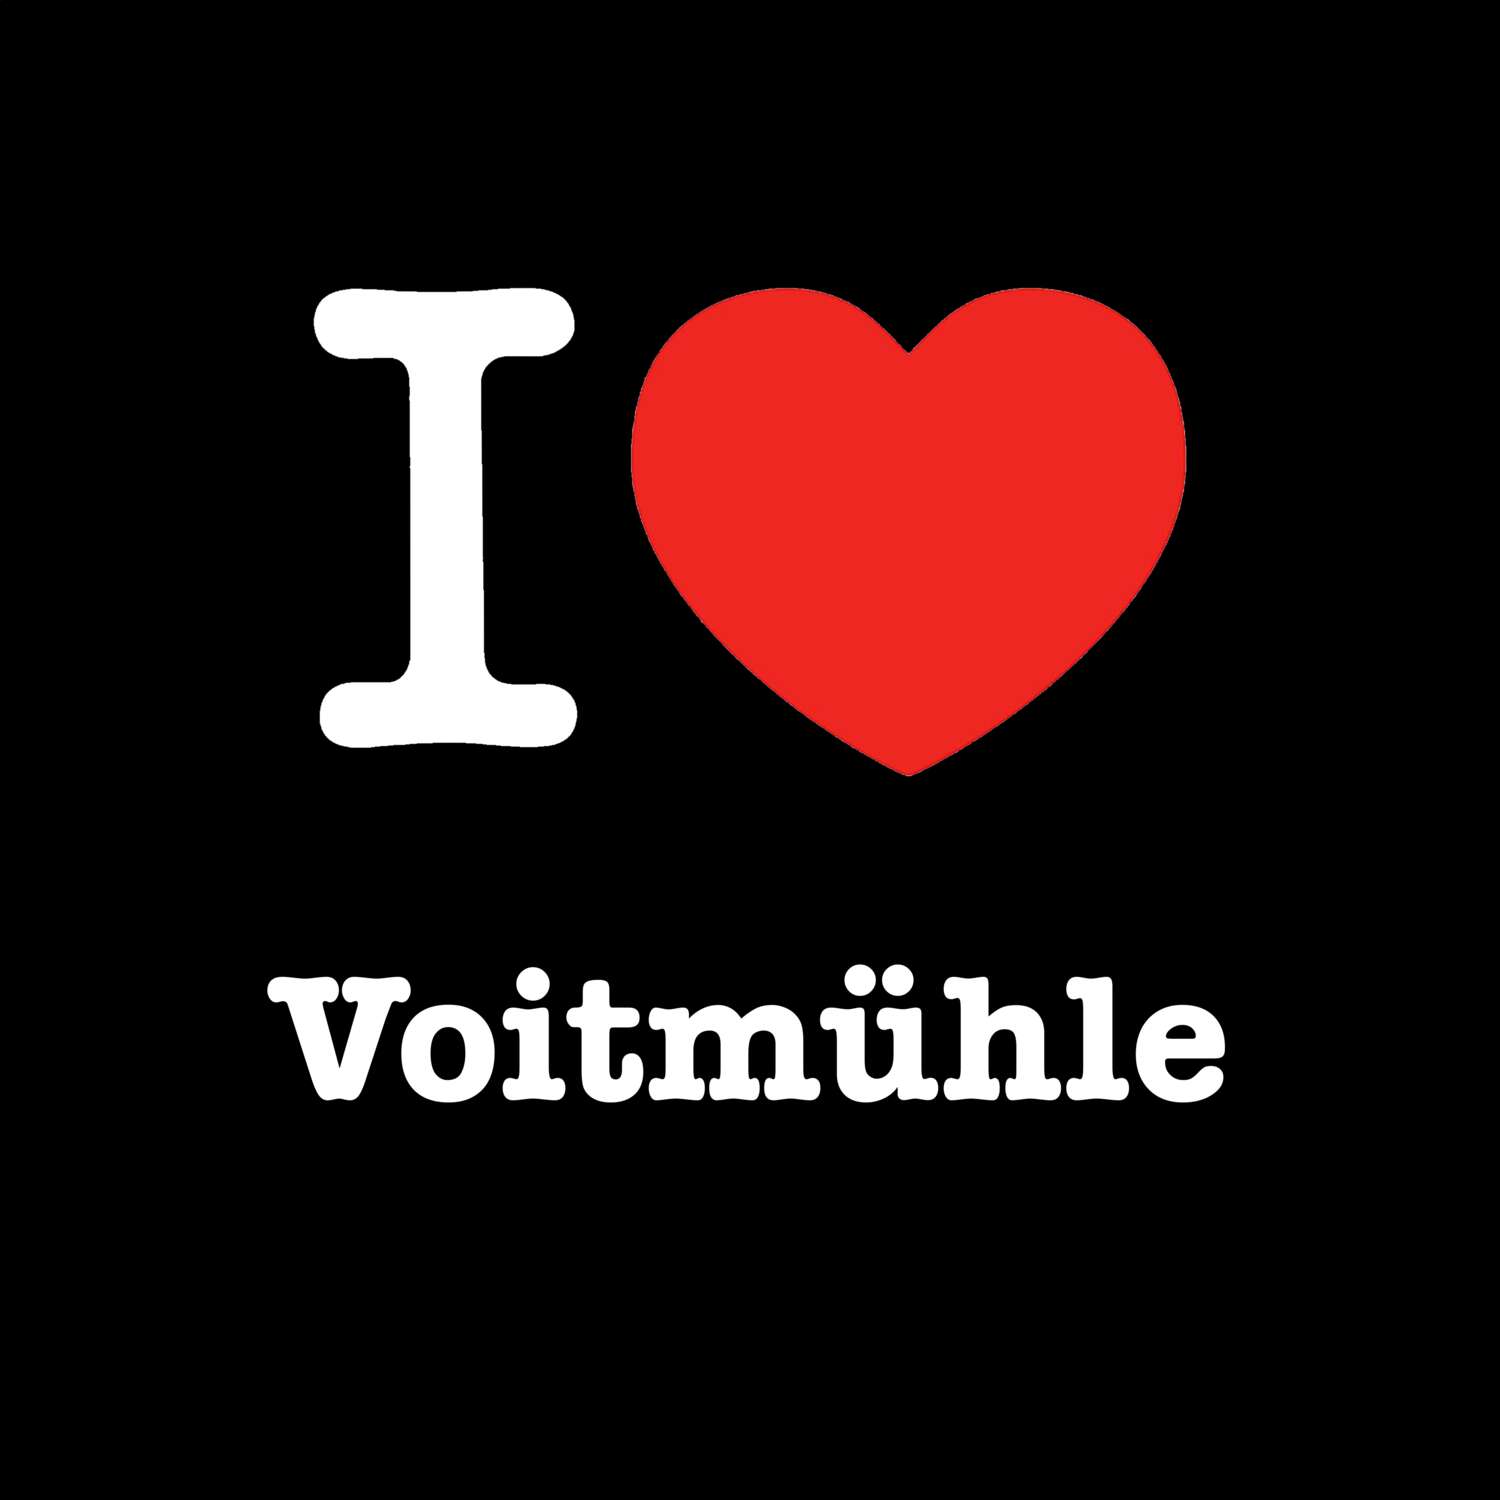 Voitmühle T-Shirt »I love«